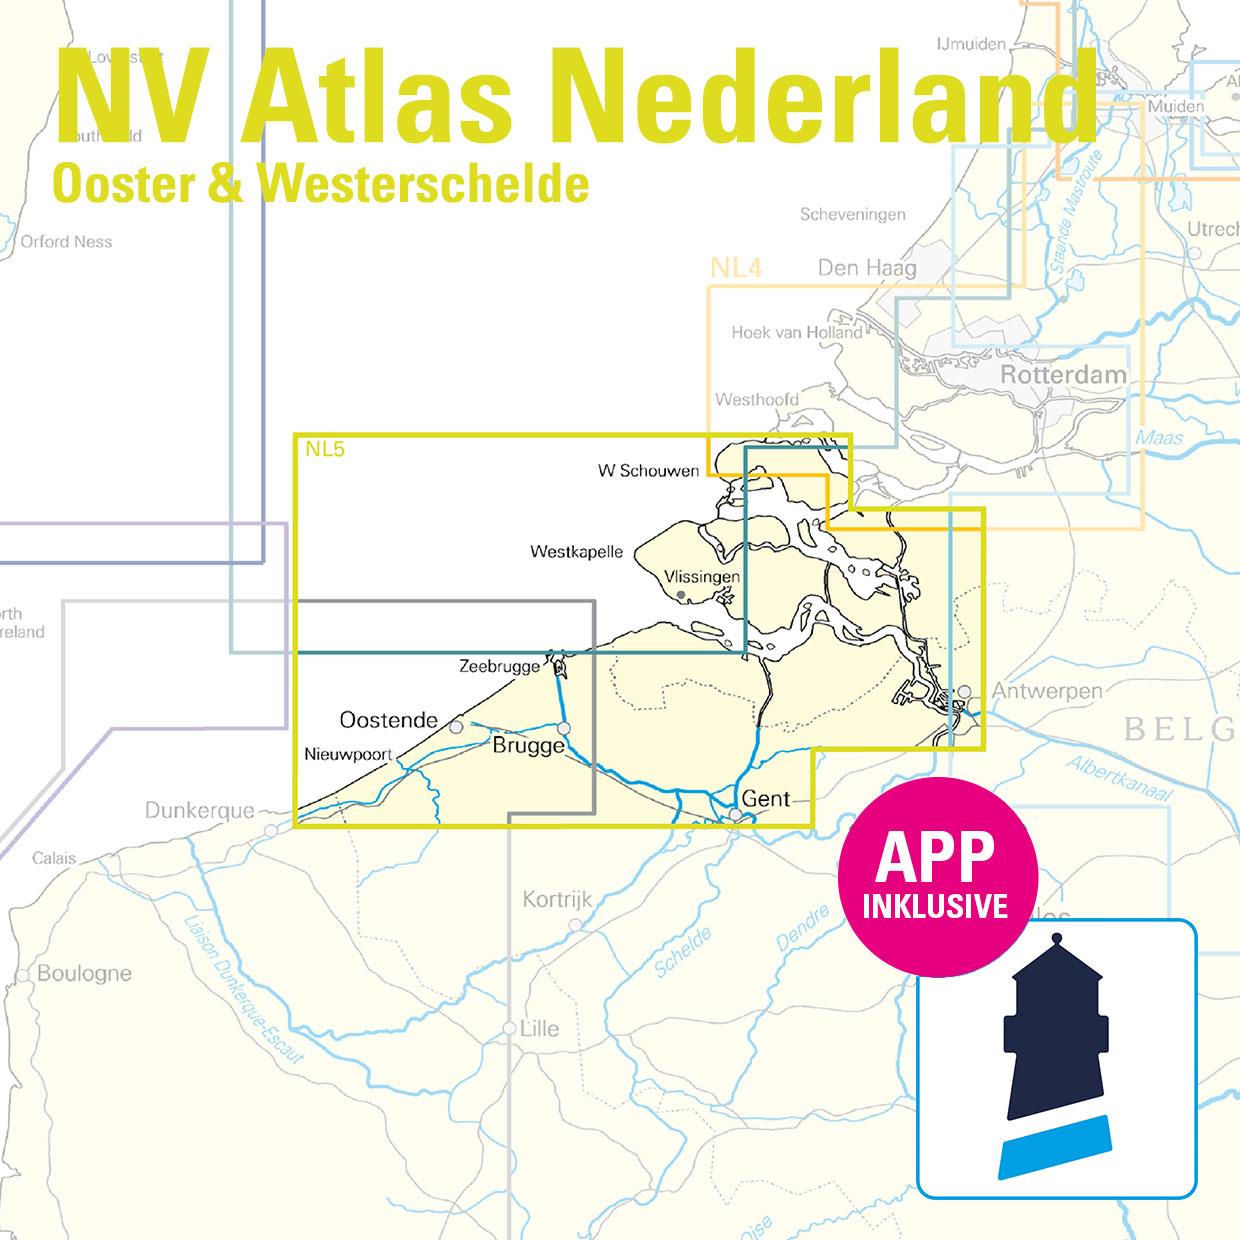 NV Charts Nederland NL5 - Ooster & Westerschelde